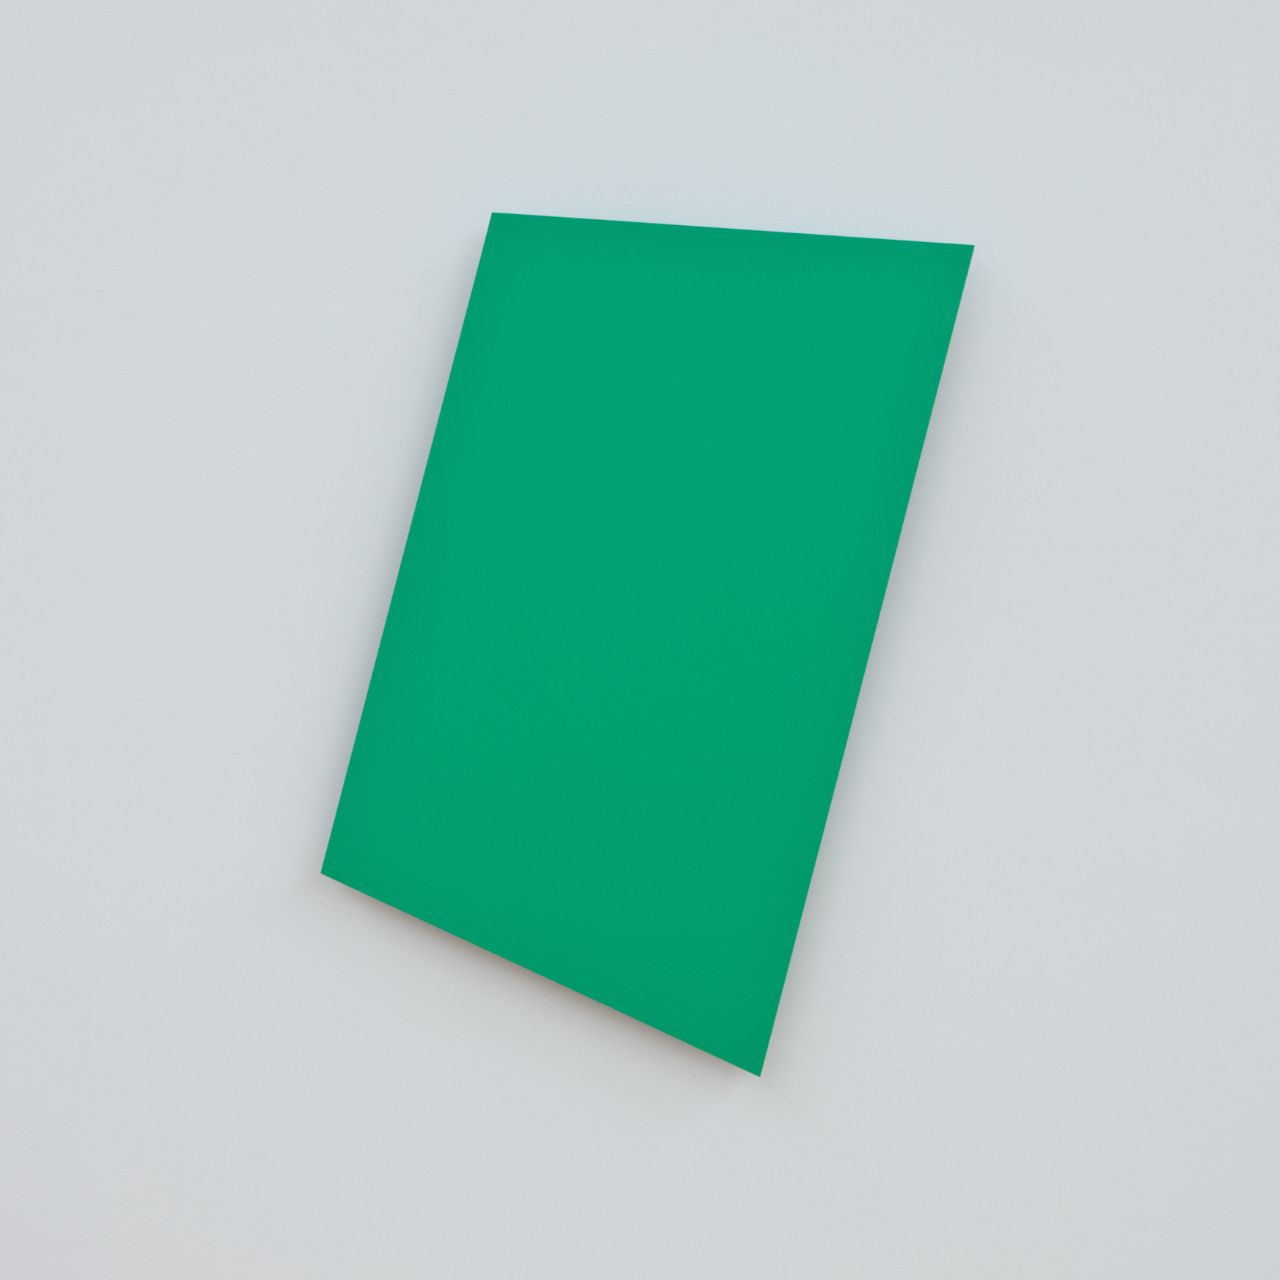 La Fondazione Nicola Del Roscio | Ellsworth Kelly: Linea, Forma, Colore